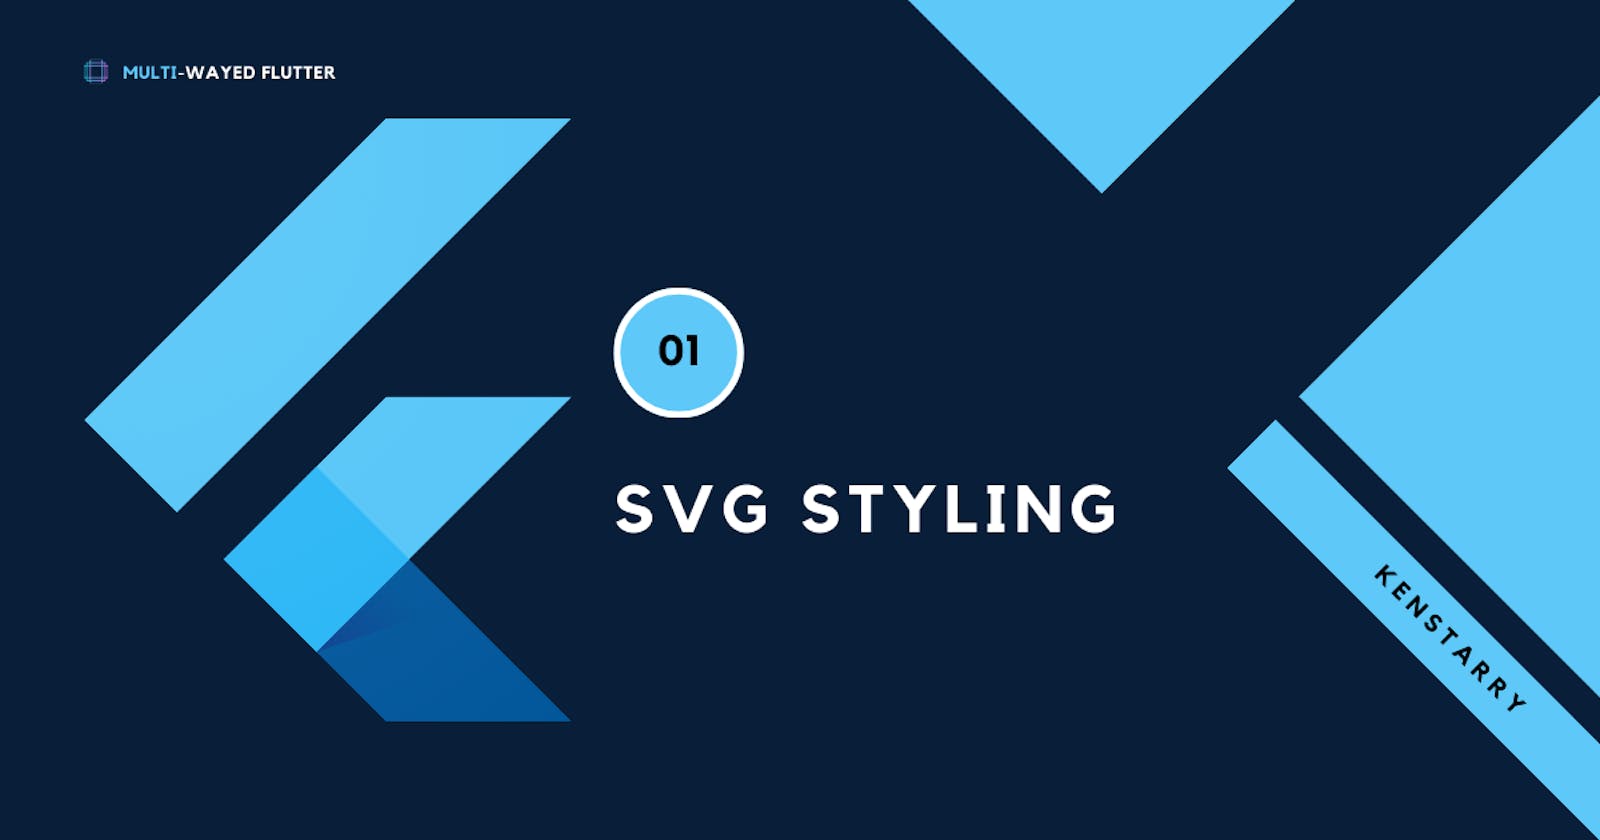 Flutter Multi-Wayed SVG Styling